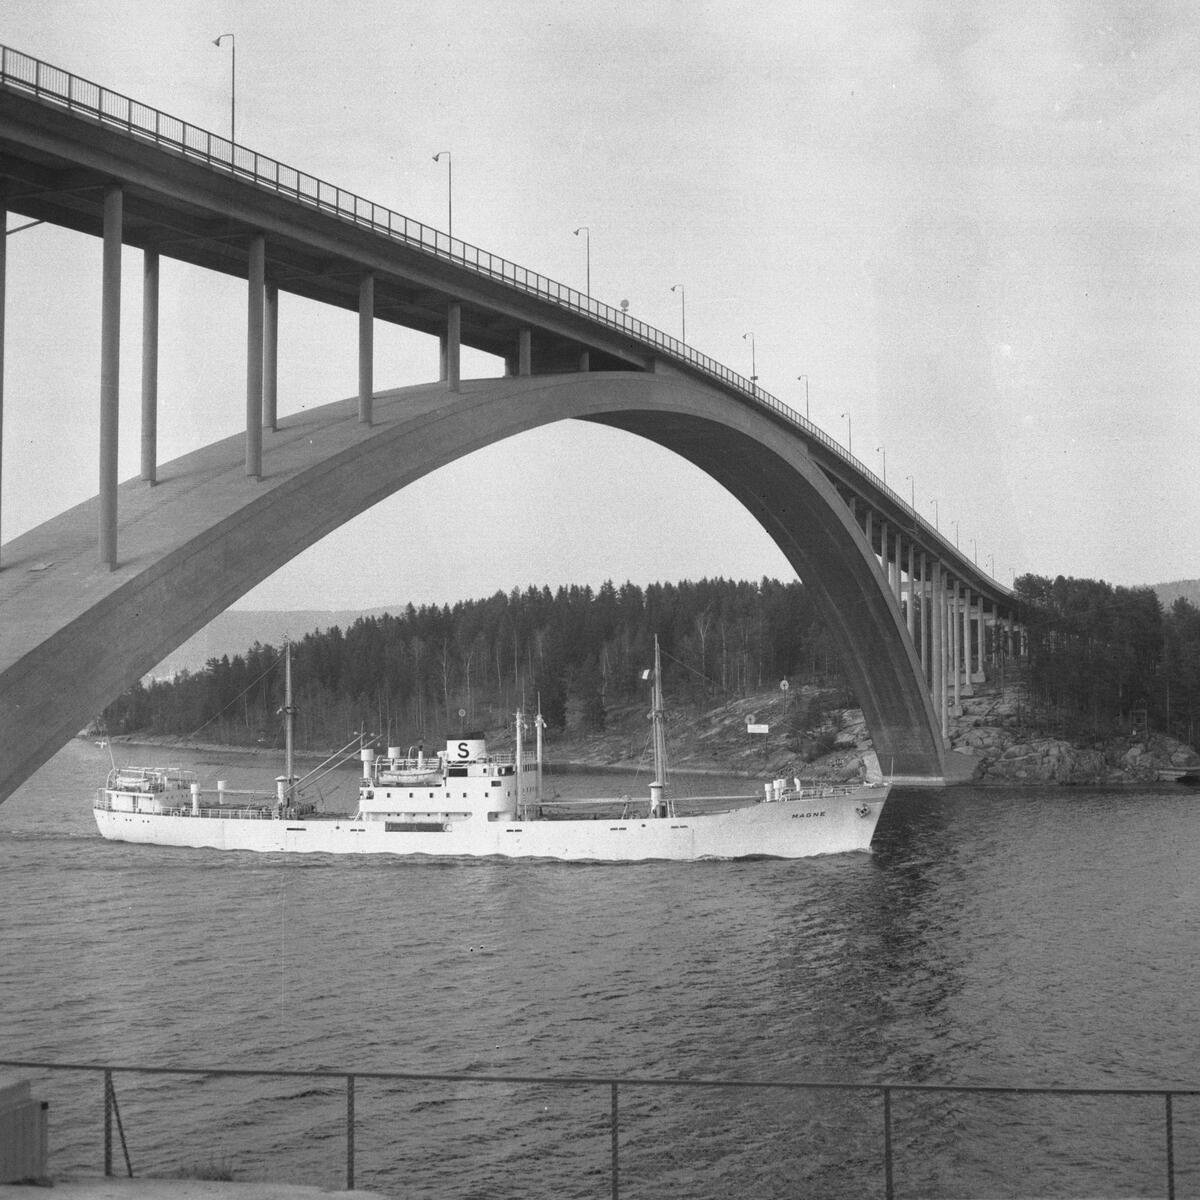 Fartyget Magne vid Sandöbron

